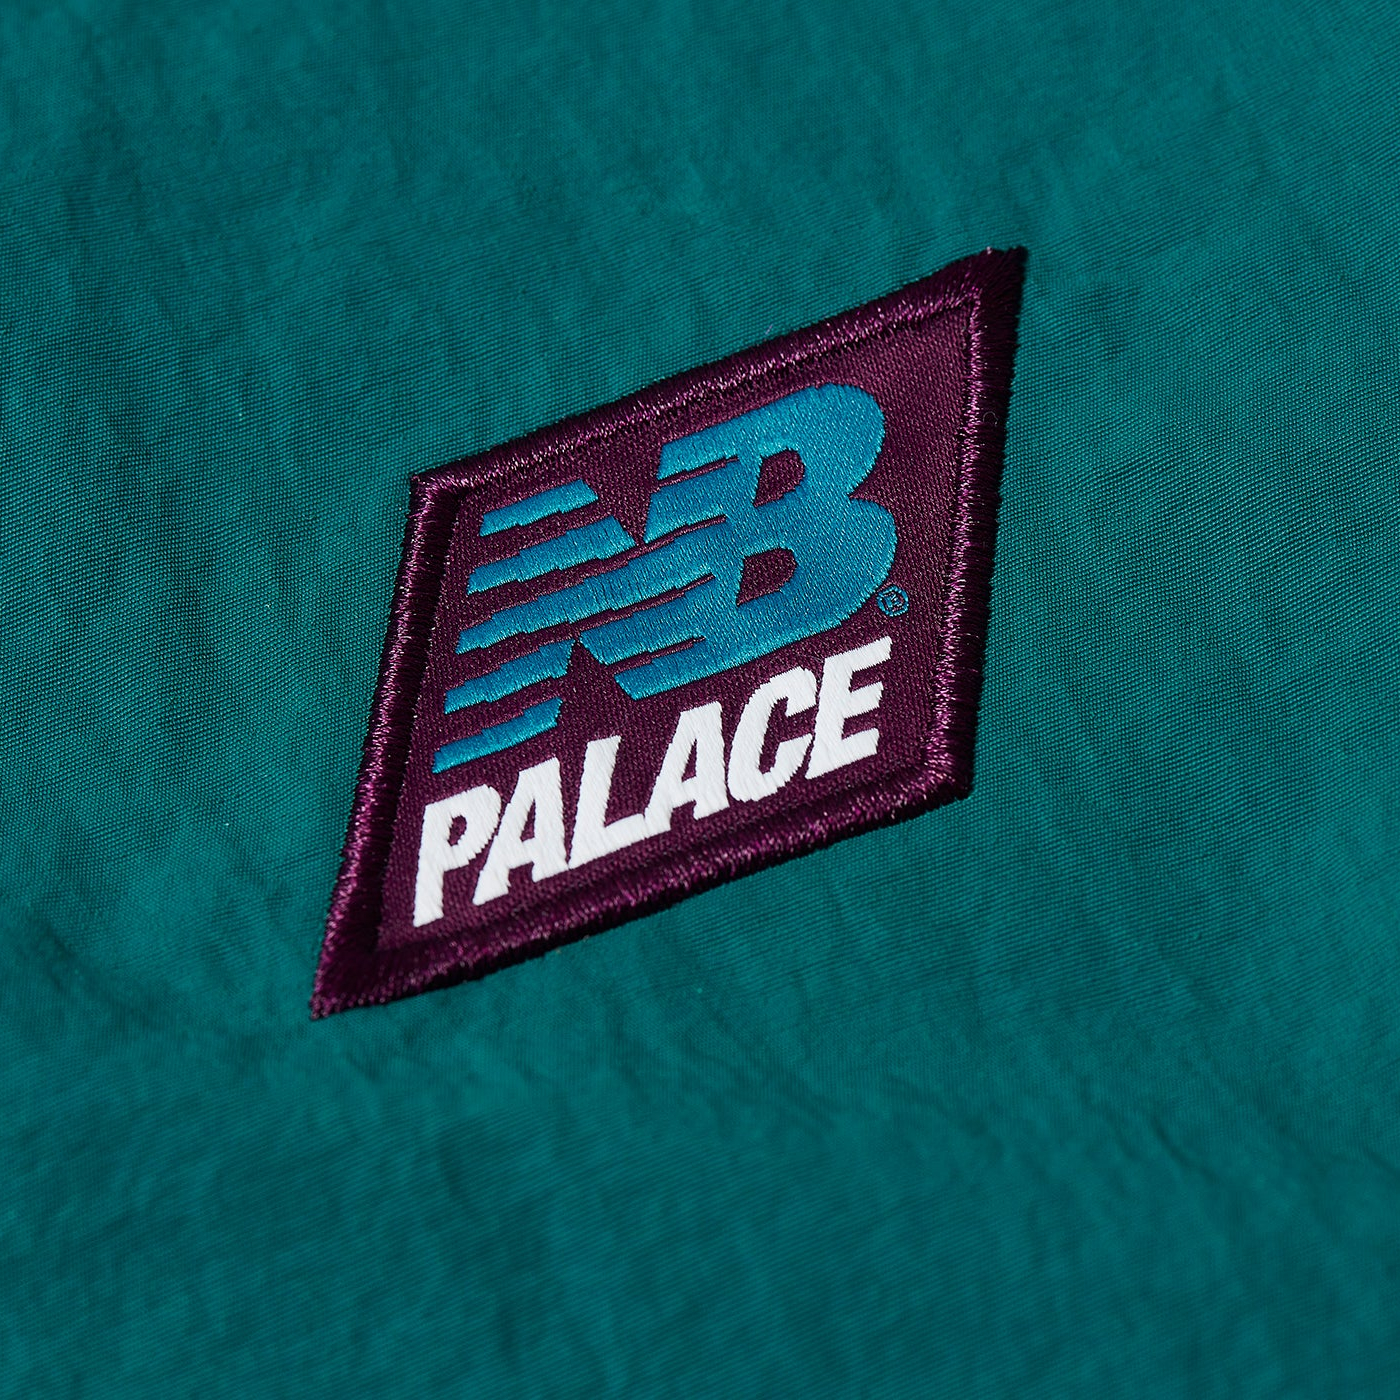 Palace New Balance Pop Over Shell Jacket Teal - Palace New Balance 